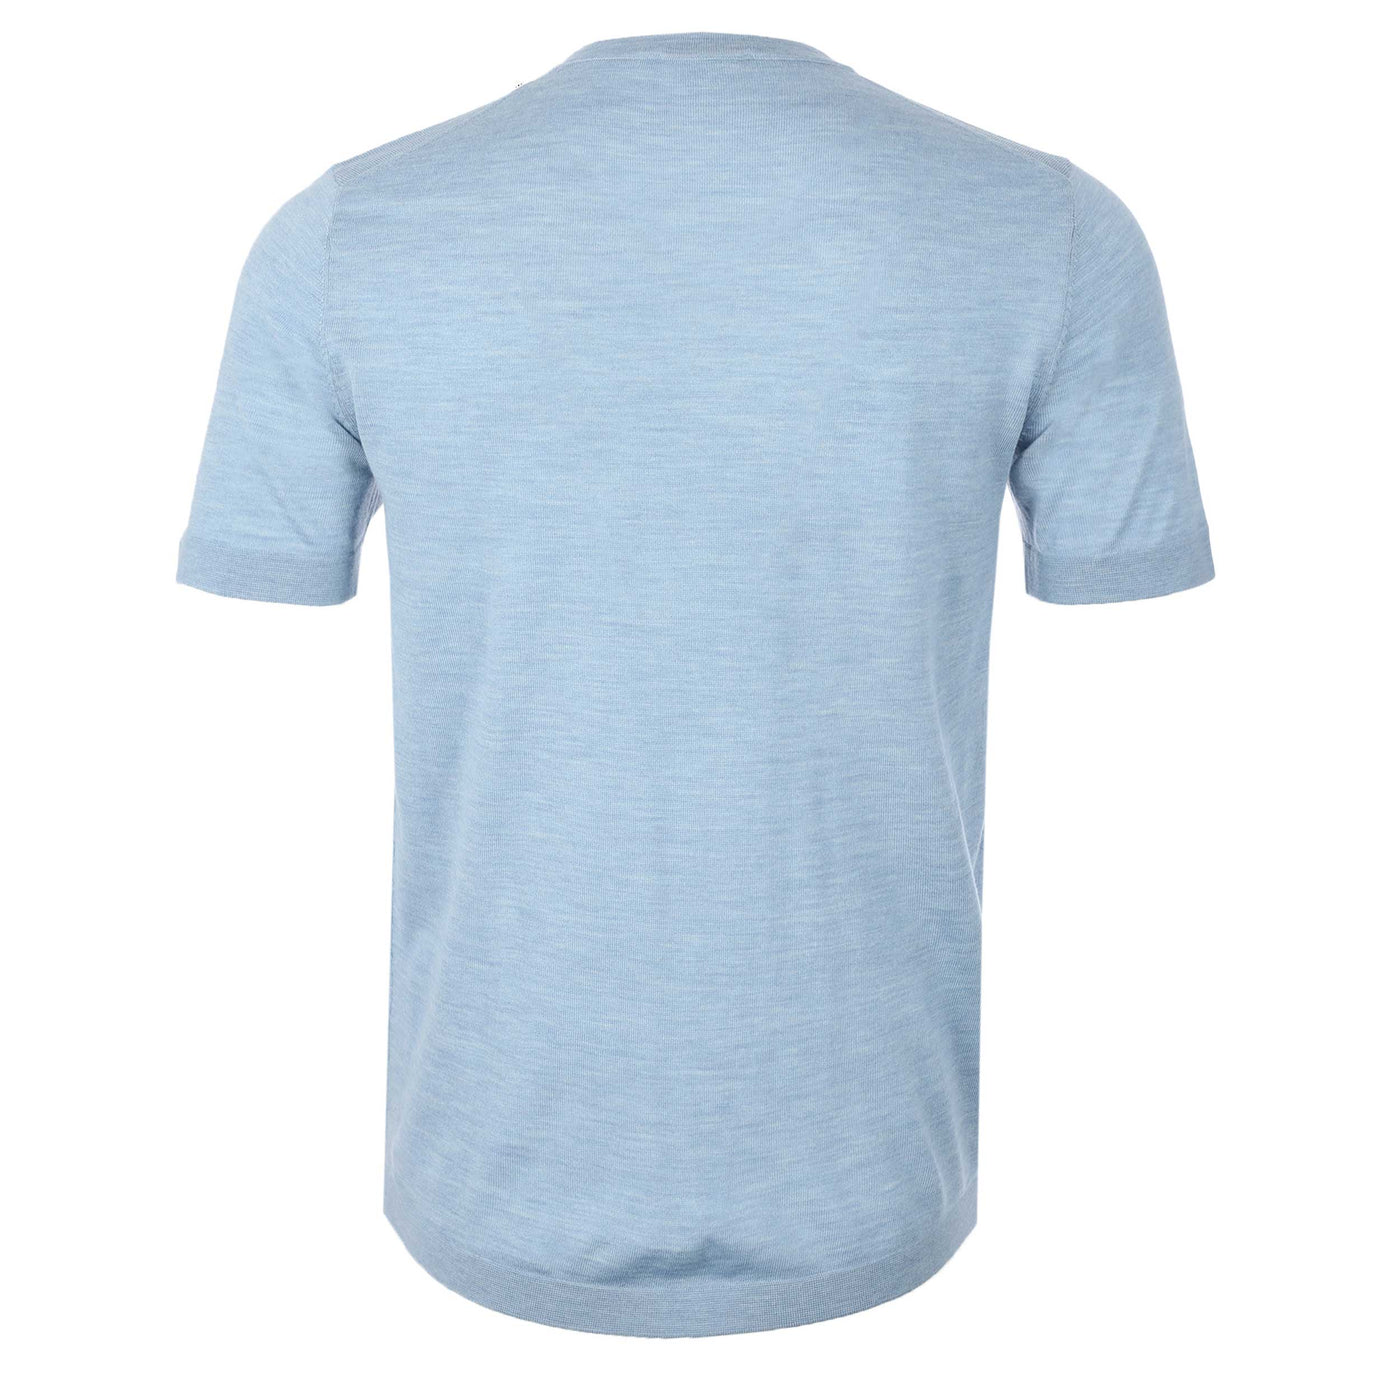 Thomas Maine Merino T-Shirt in Sky Blue Back